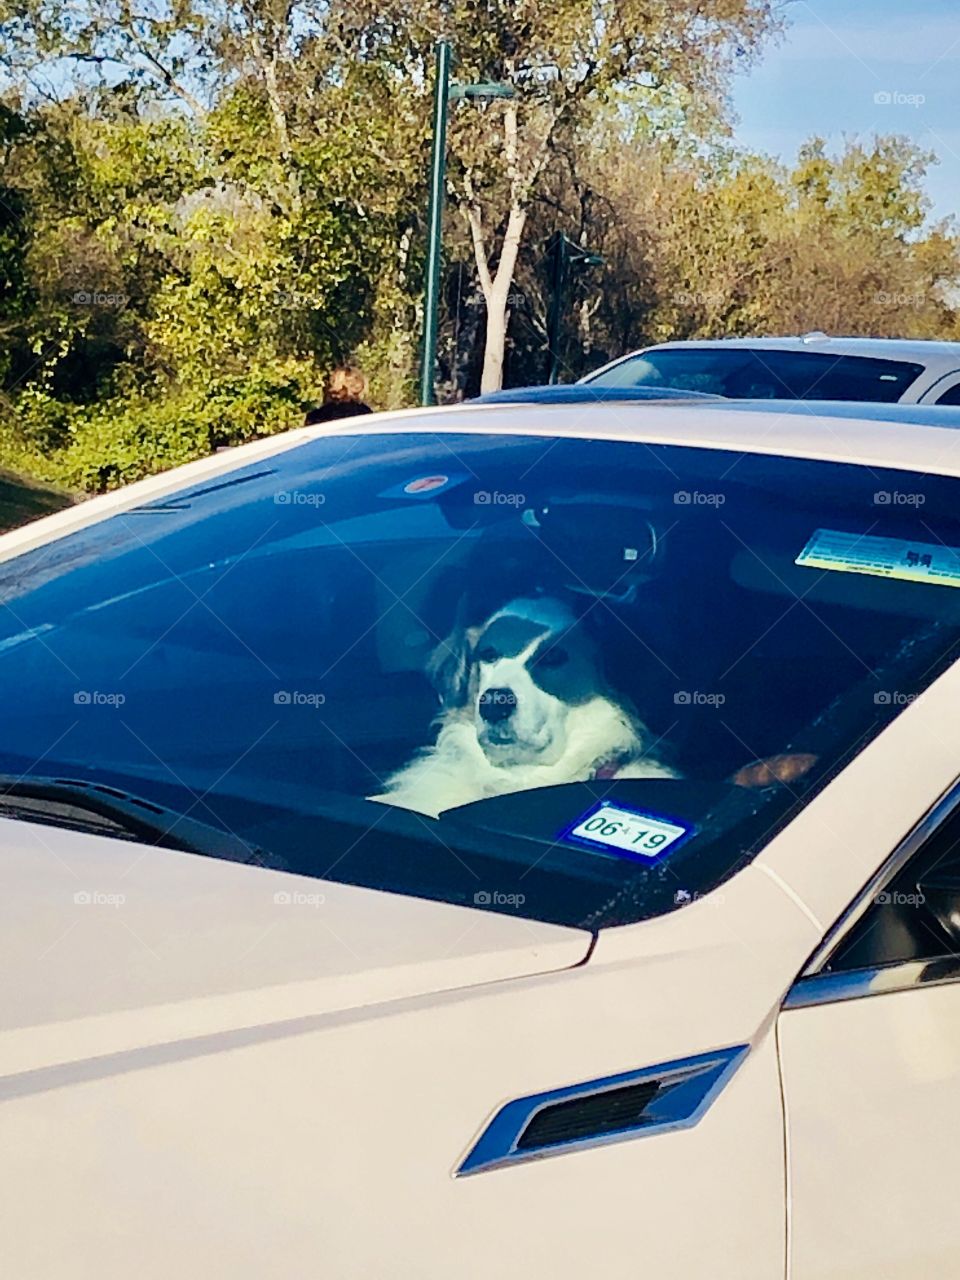 Random dog chilling in the car